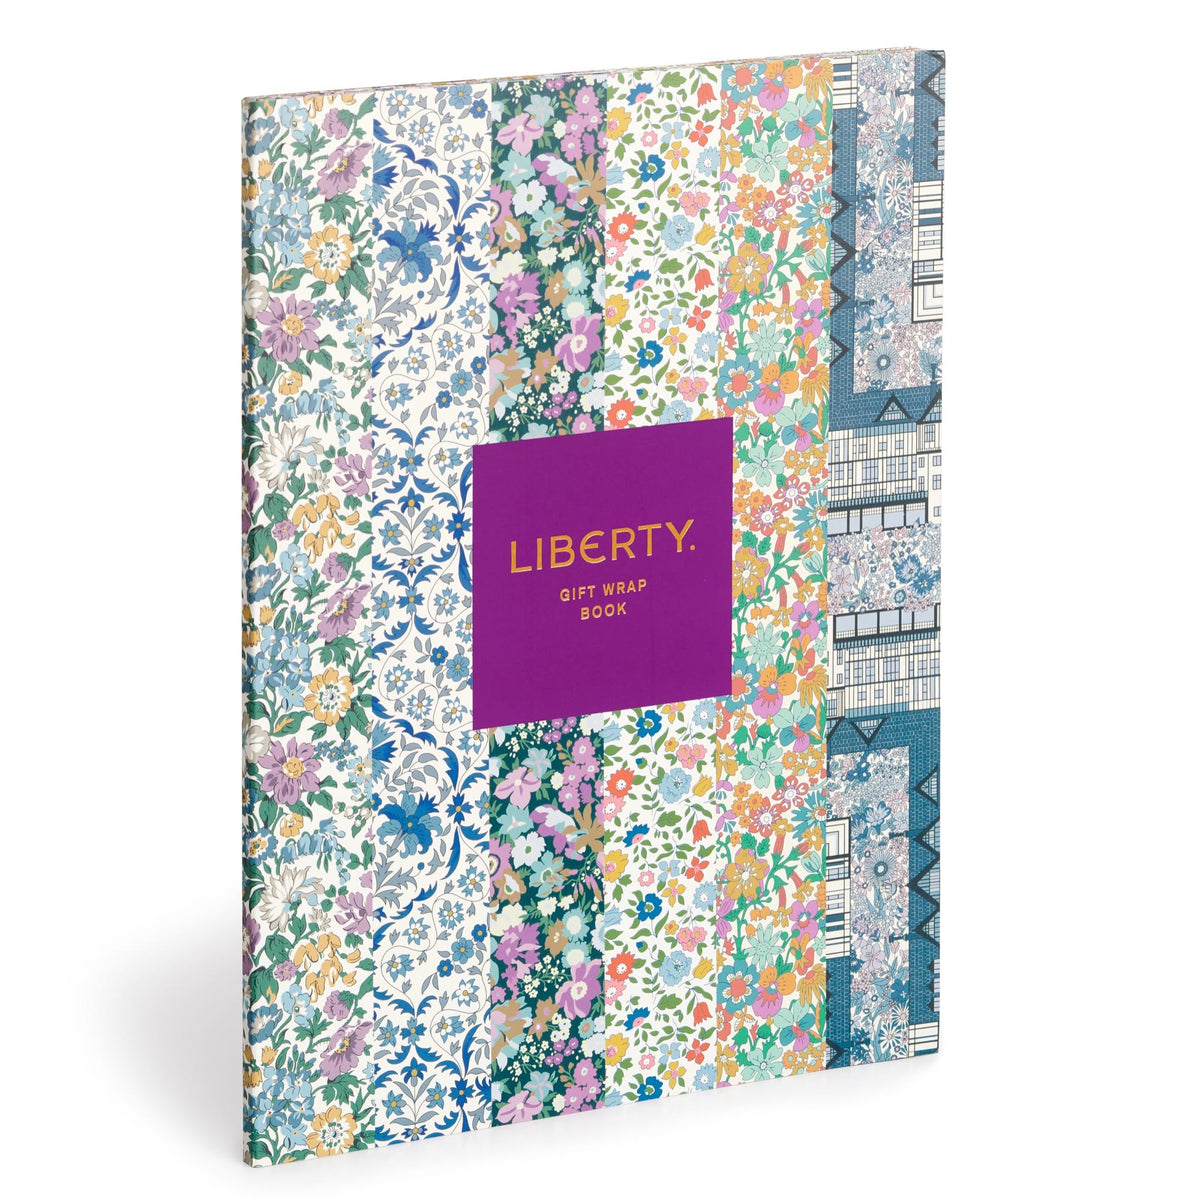 liberty-gift-wrap-book-gift-wrap-liberty-of-london-ltd-503820